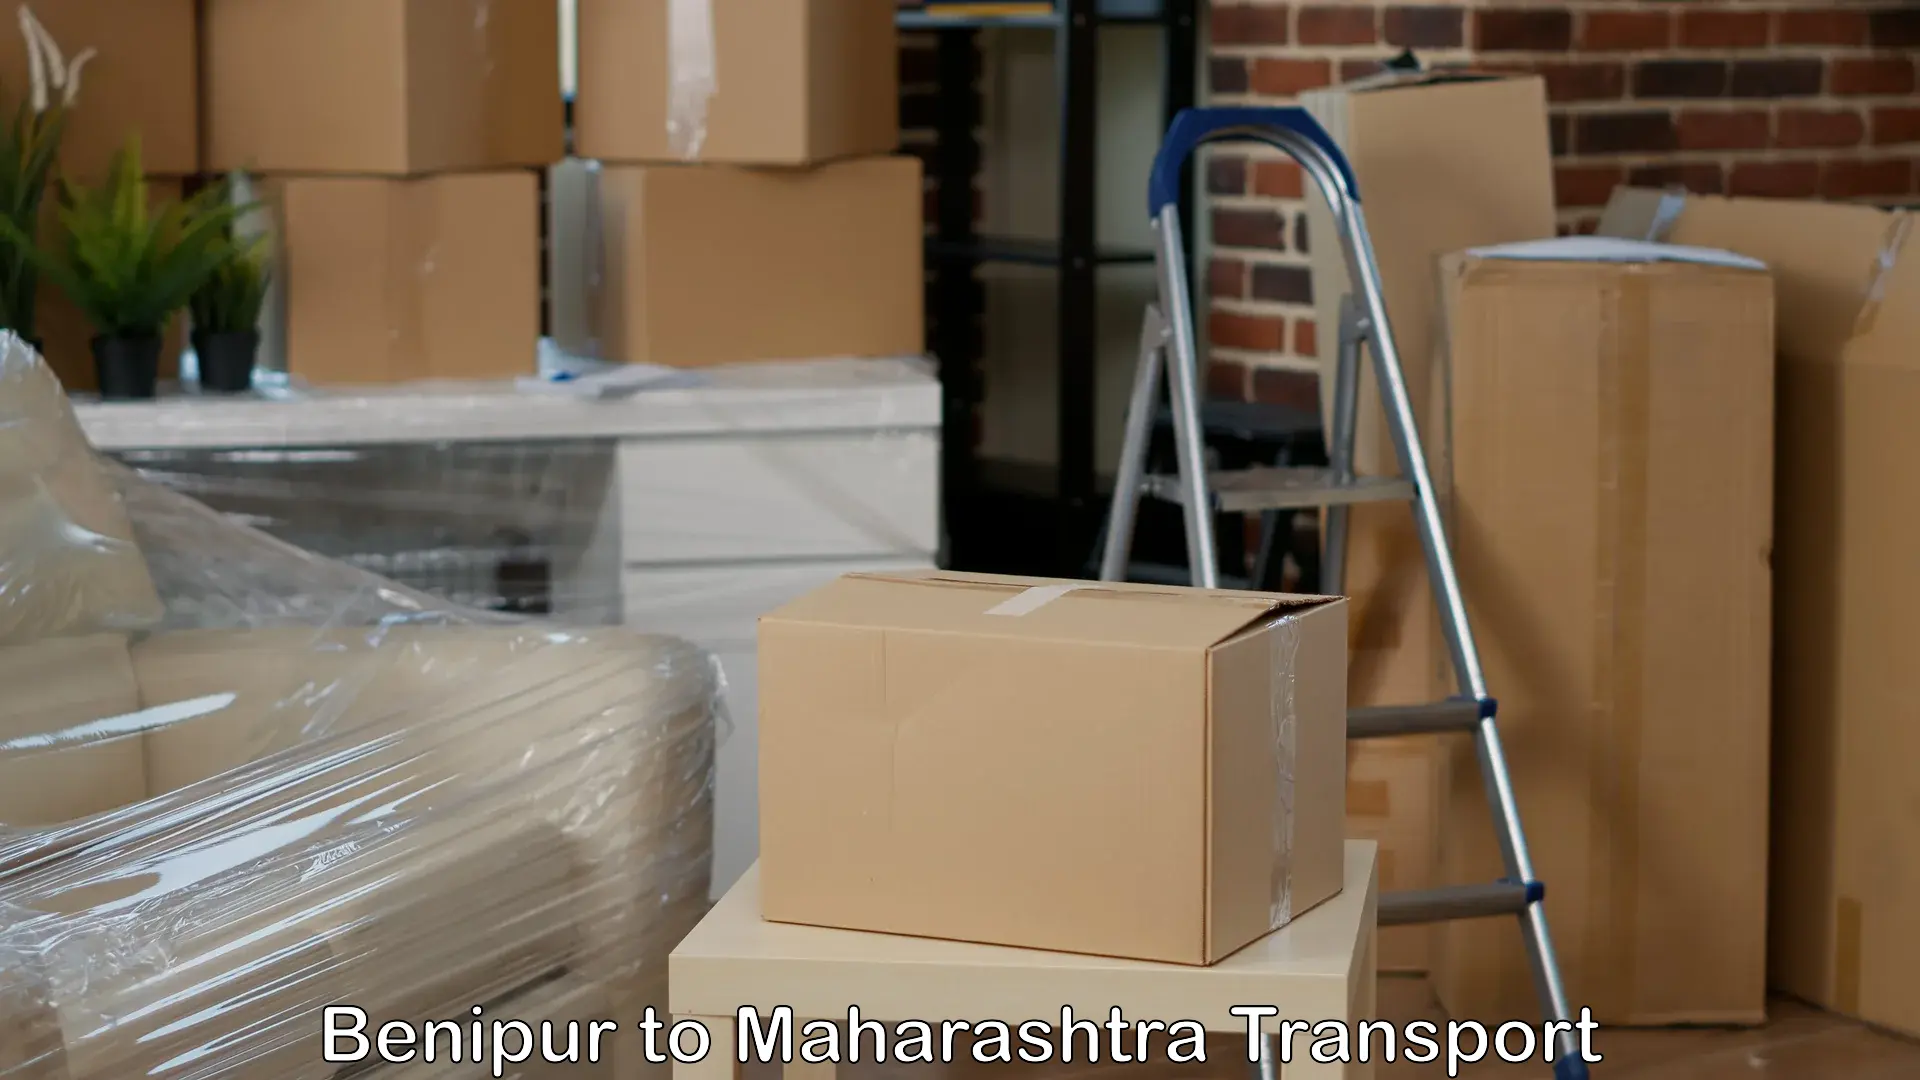 Truck transport companies in India Benipur to Jaysingpur